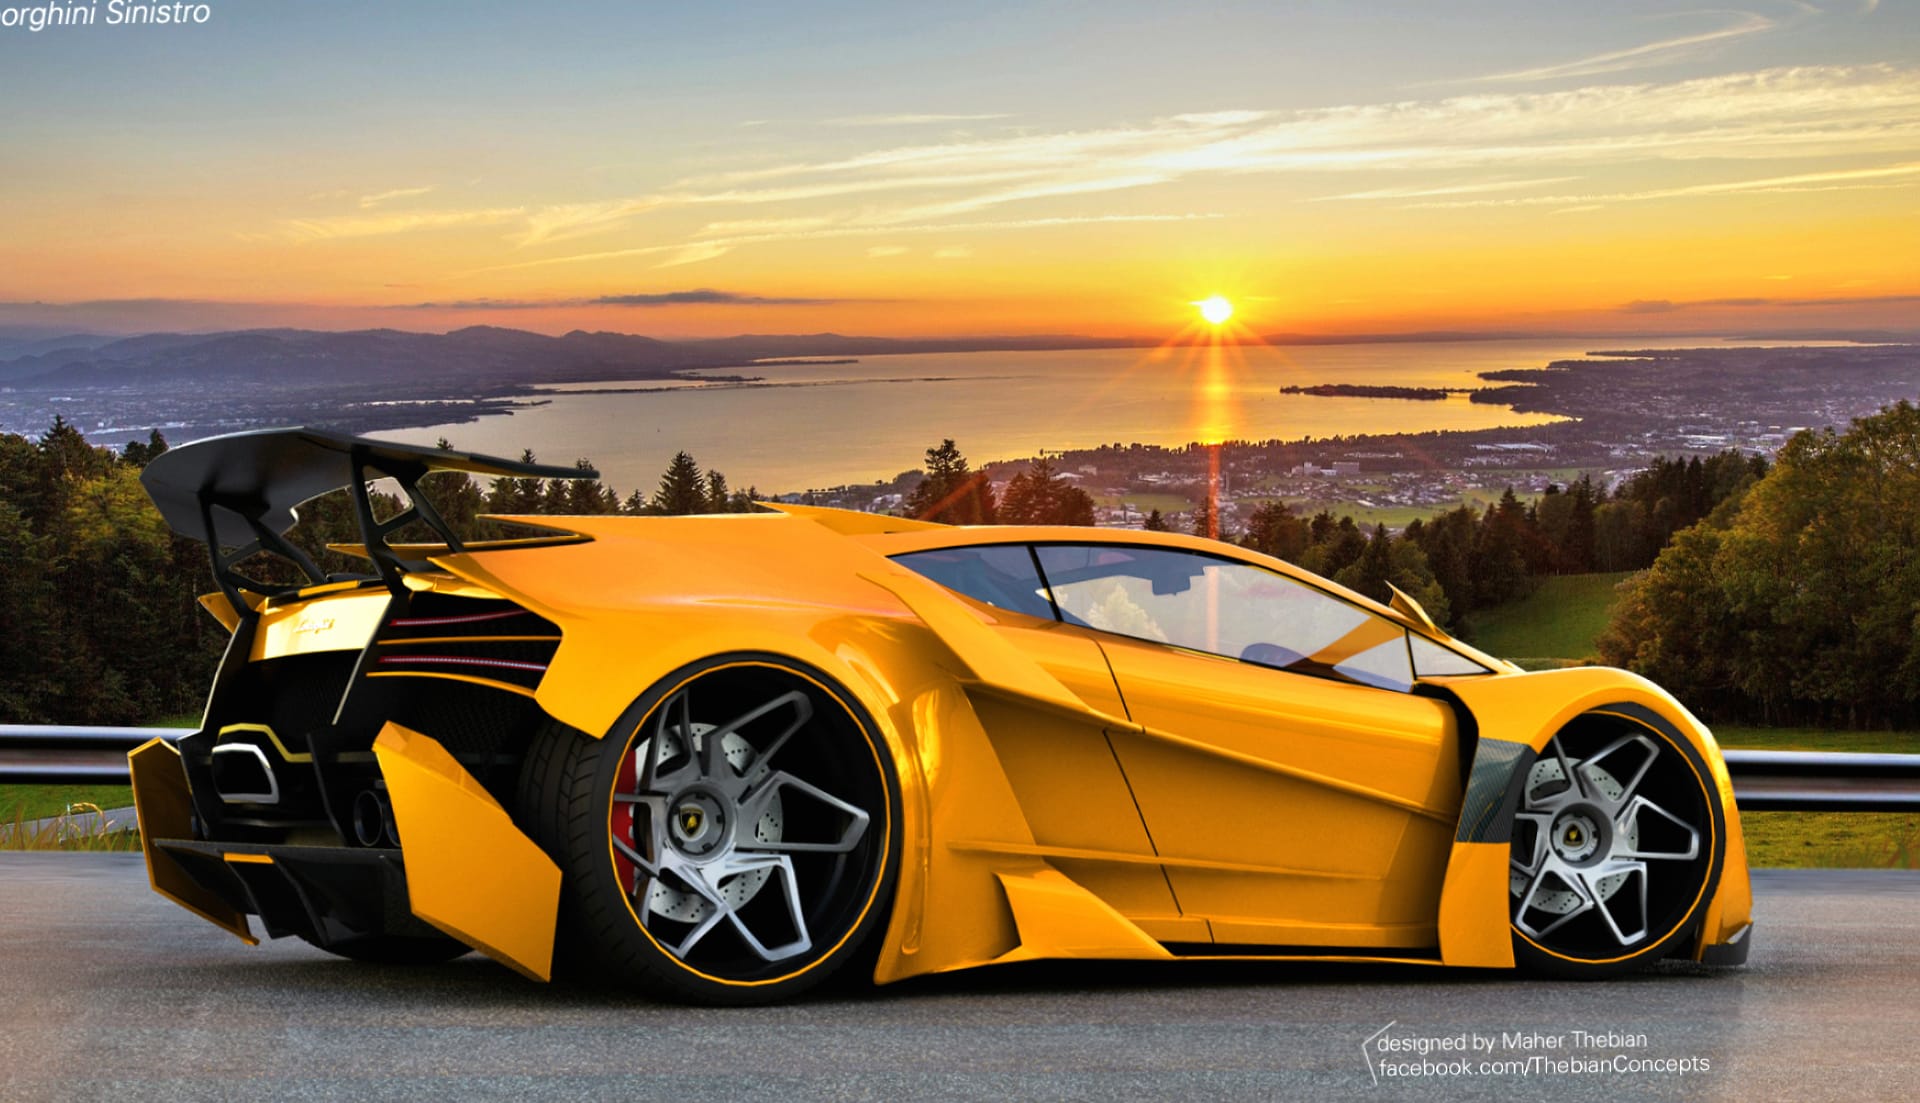 Lamborghini Sinistro Concept at 1024 x 1024 iPad size wallpapers HD quality